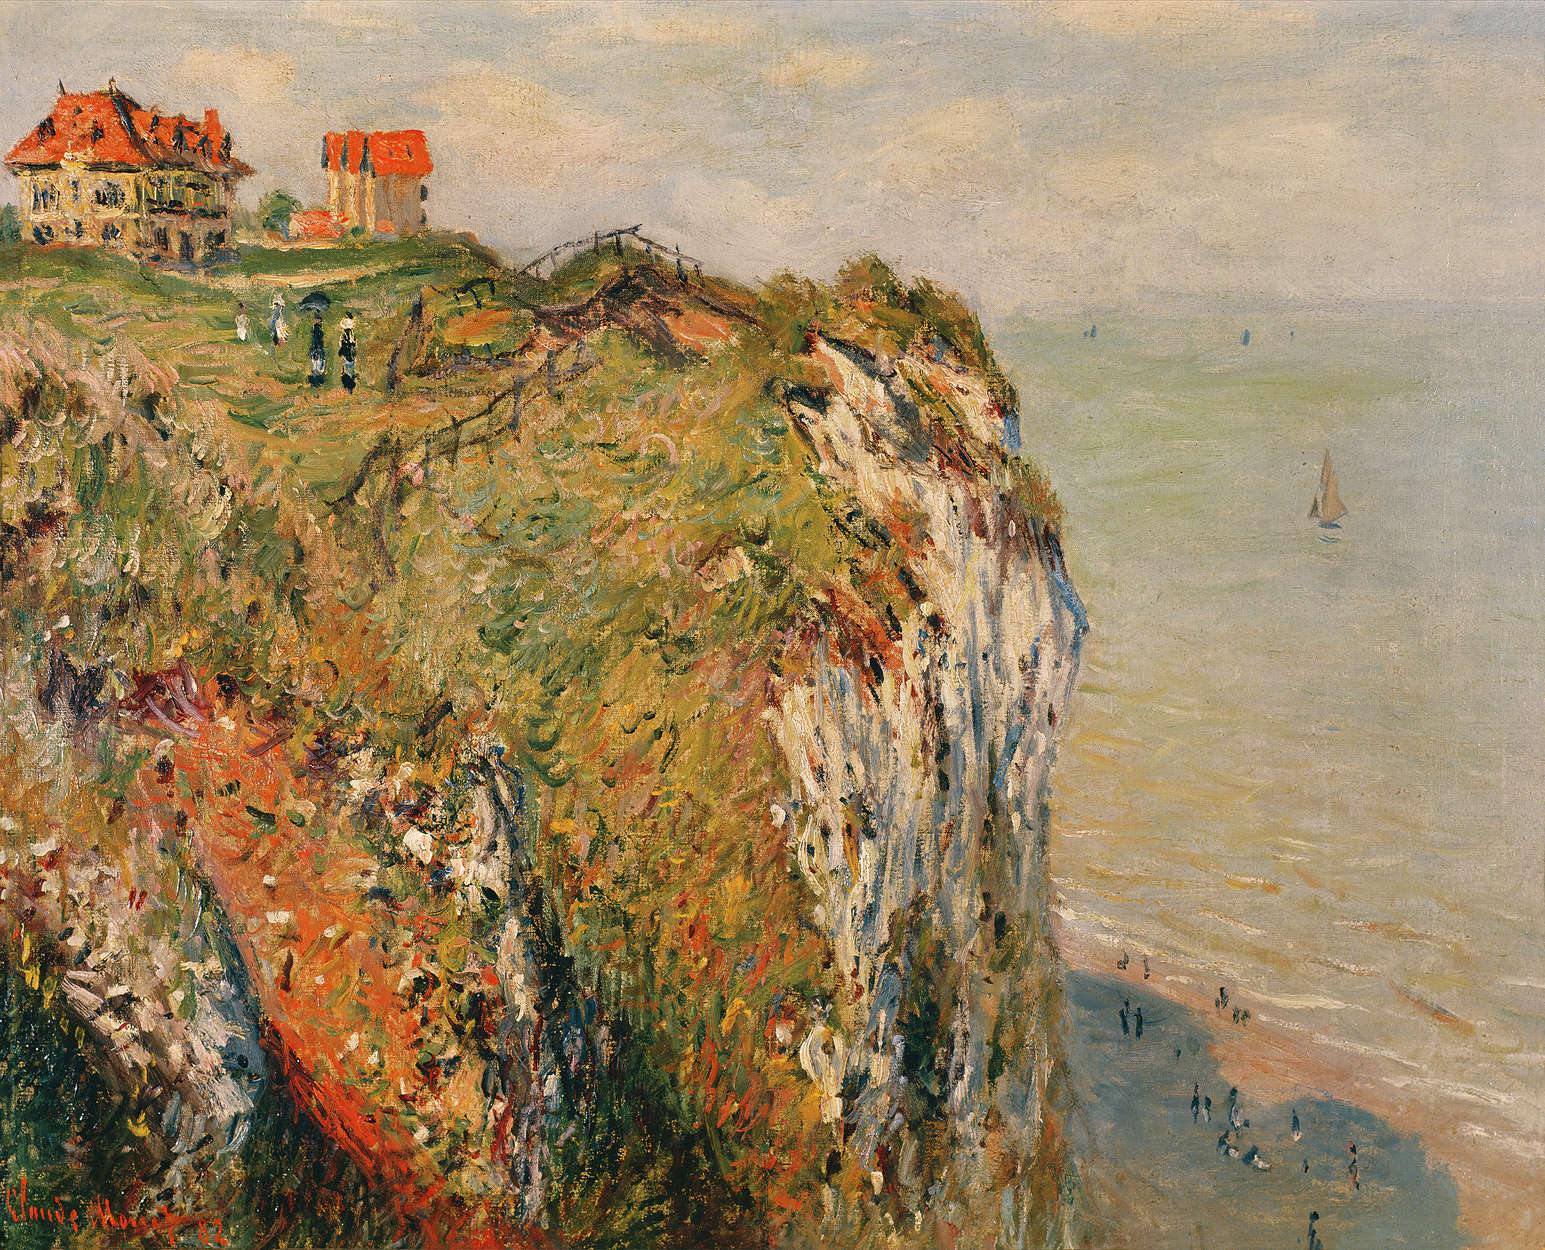             Photo wallpaper "Cliff near Dieppe" by Claude Monet
        